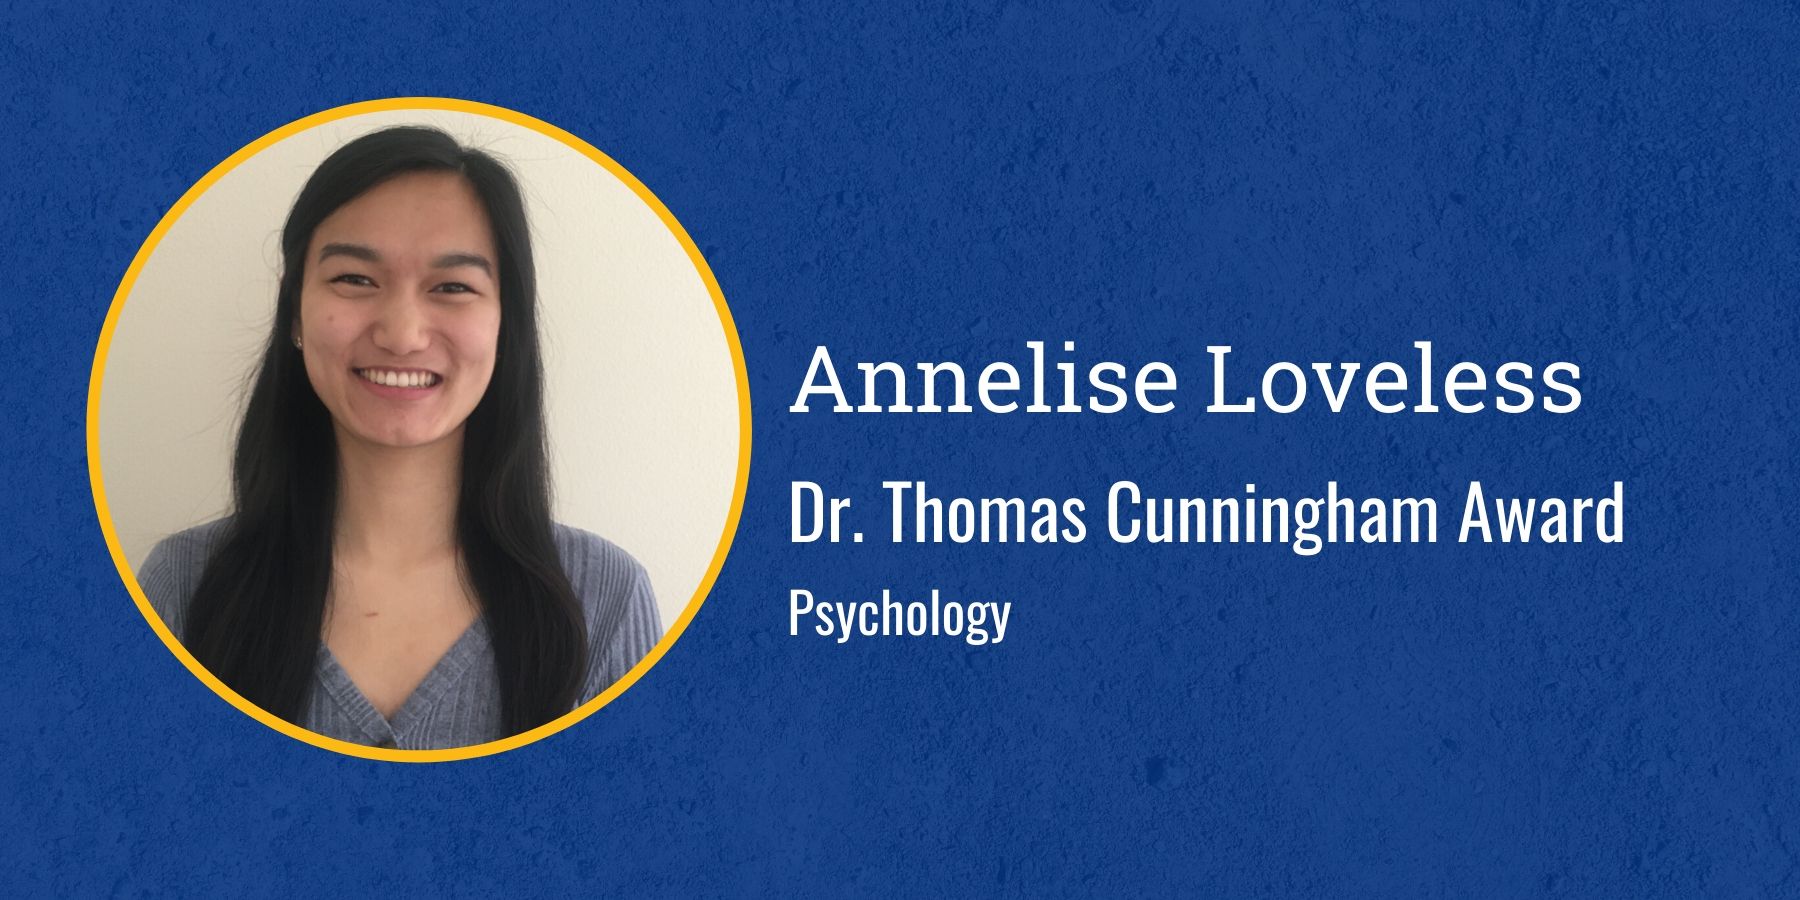 Photo of Annalise Loveless and text Dr. Thomas Cunningham award, Psychology